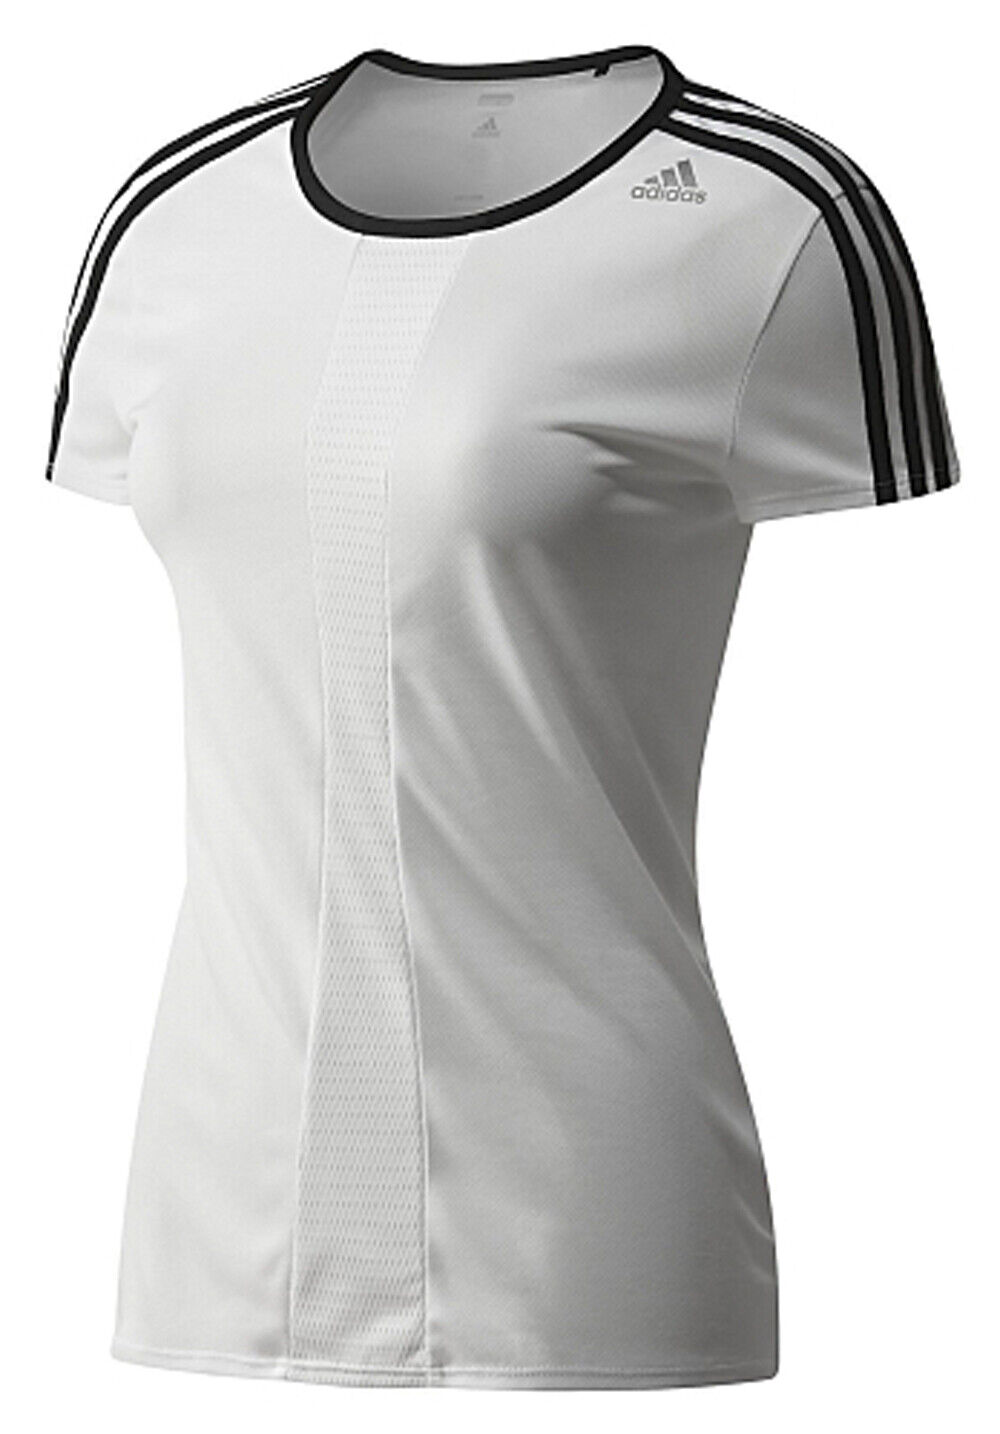 Adidas Womens White Max 83% OFF Fitness T-Shirt Lightweig Sports Running price Gym